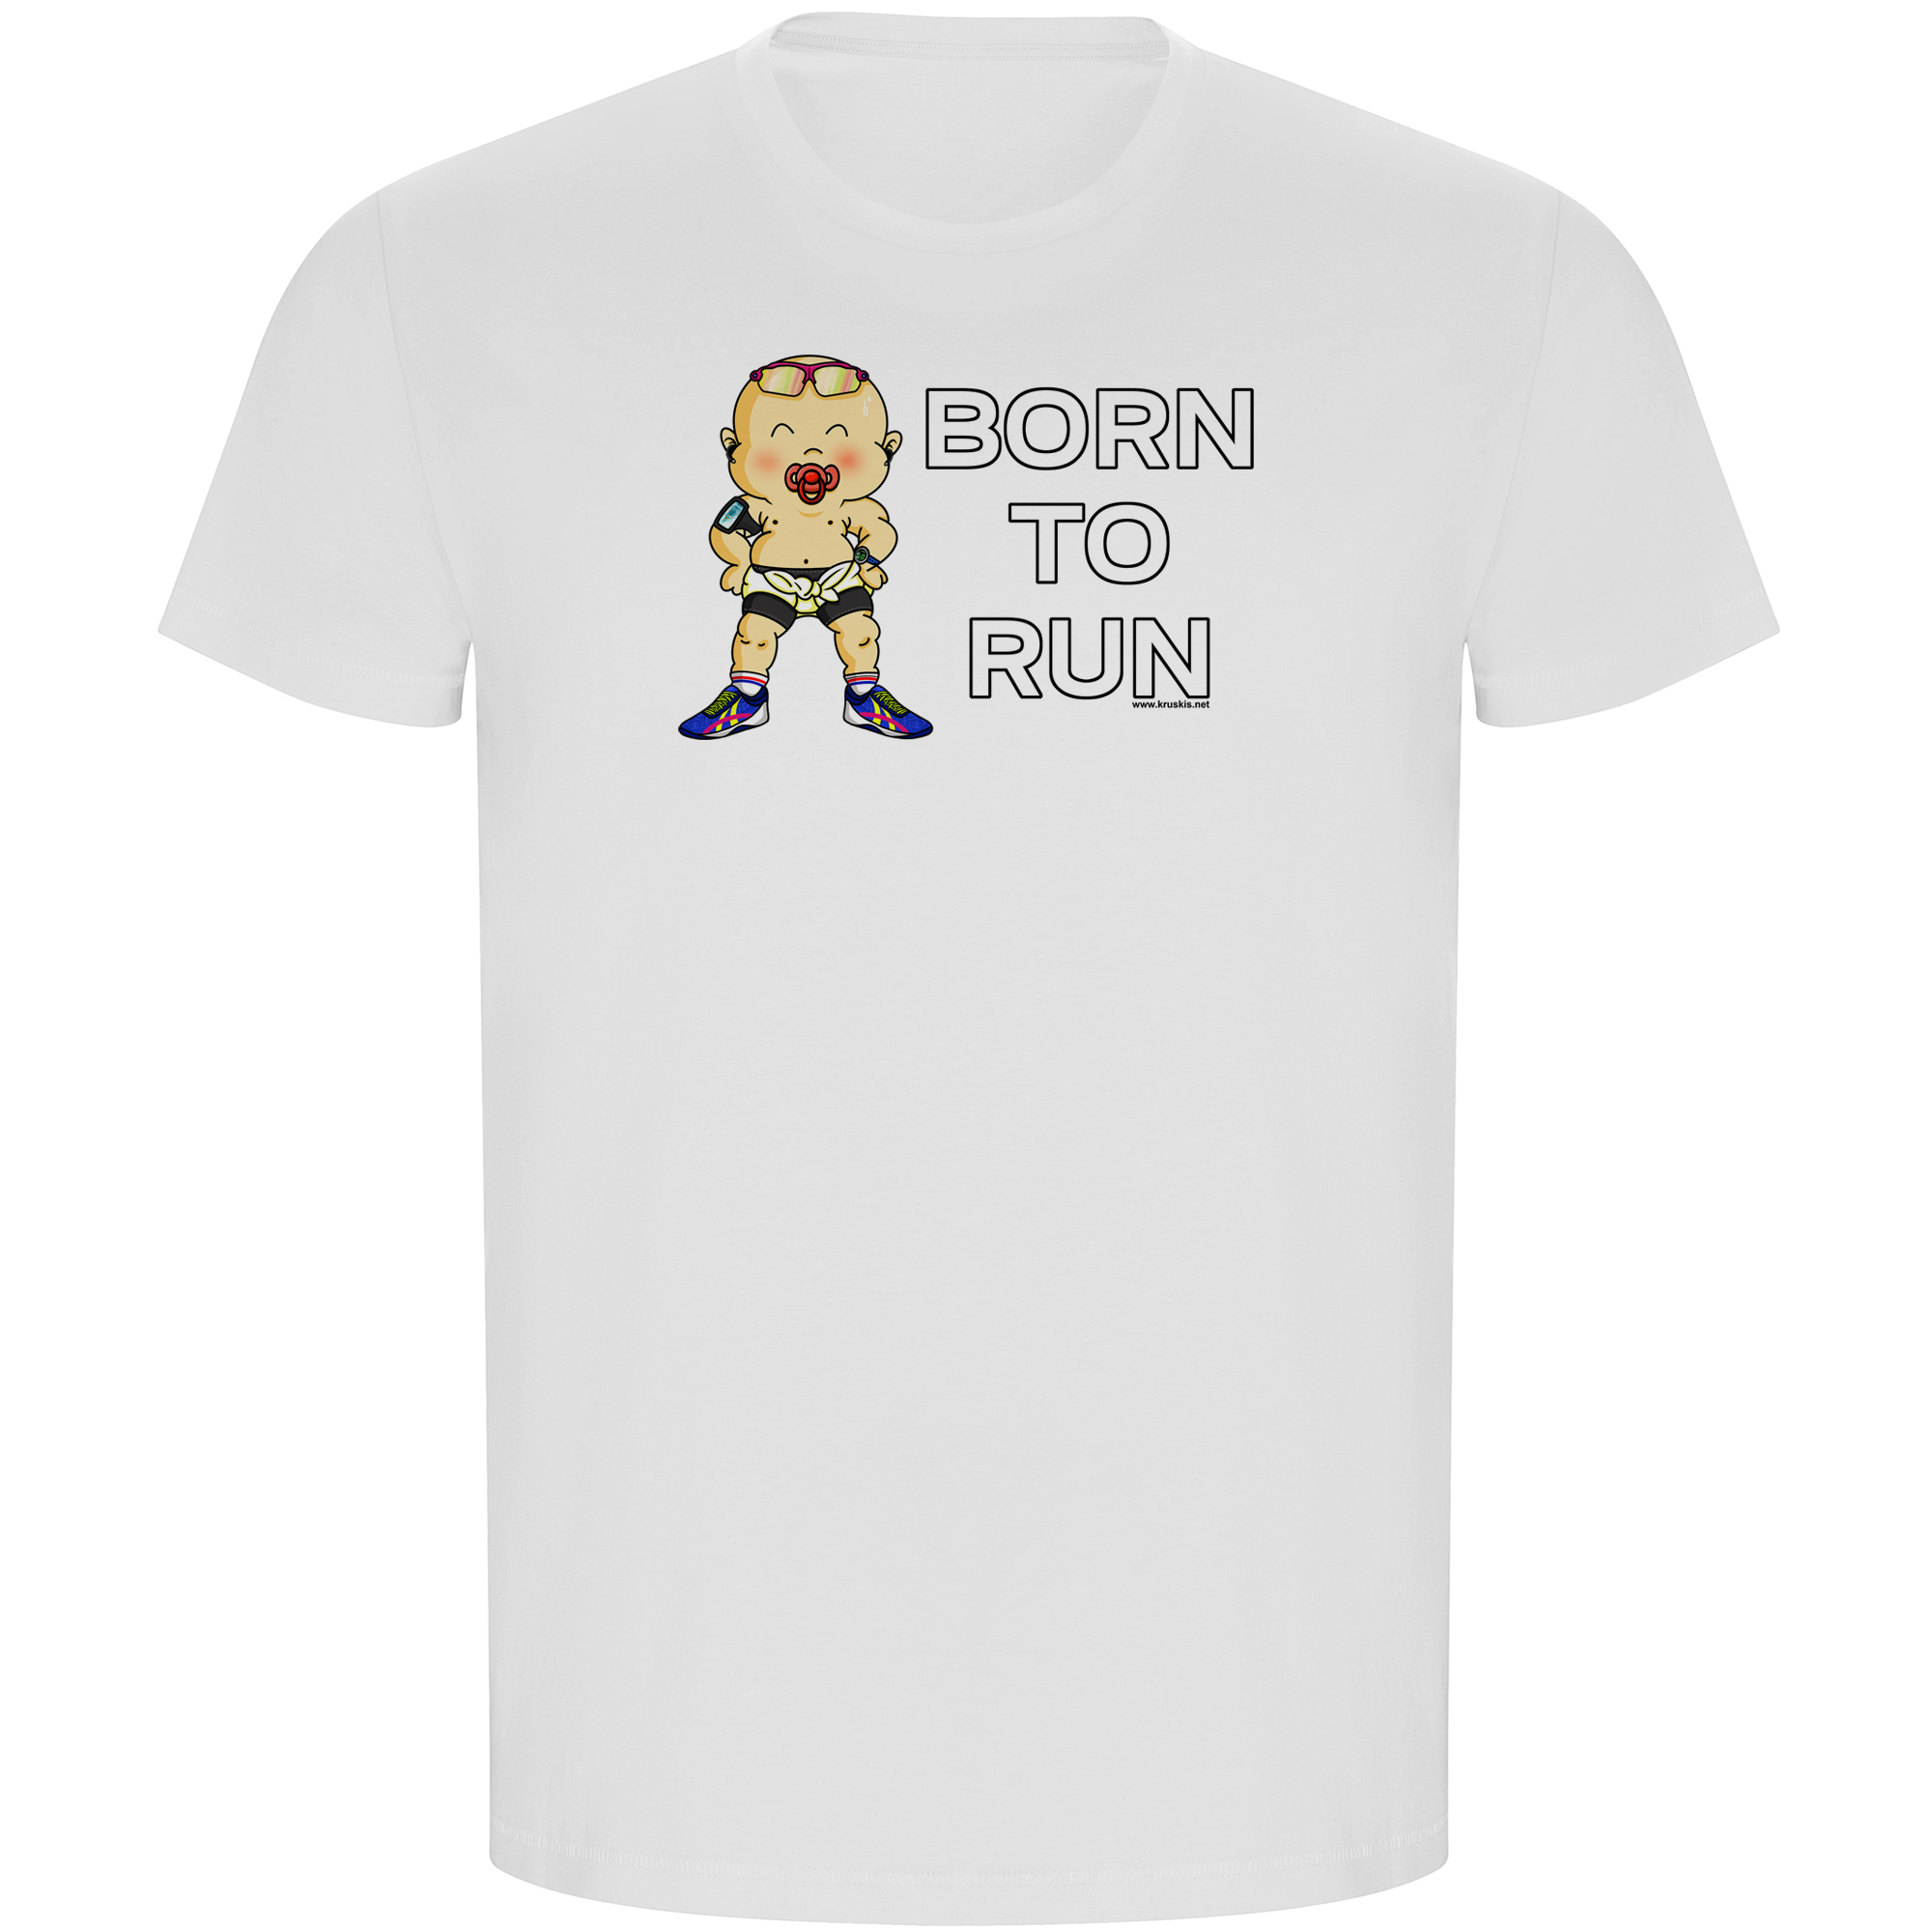 Camiseta ECO Running Born to Run Manga Corta Hombre